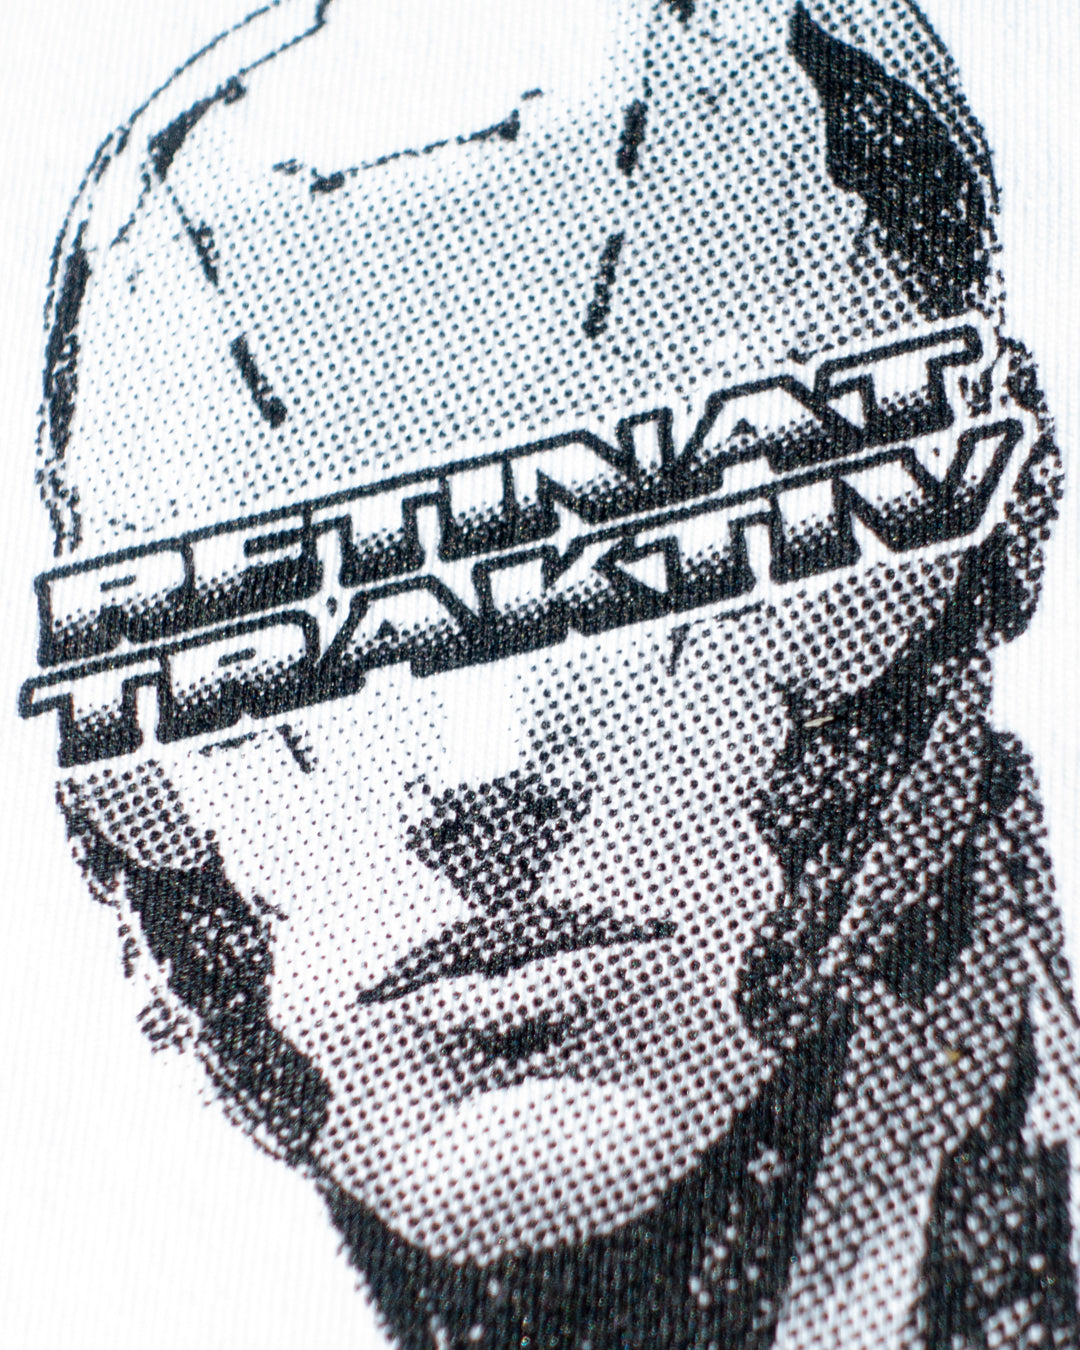 Augmented Reality Cyborg T-shirt - Multiple sizes